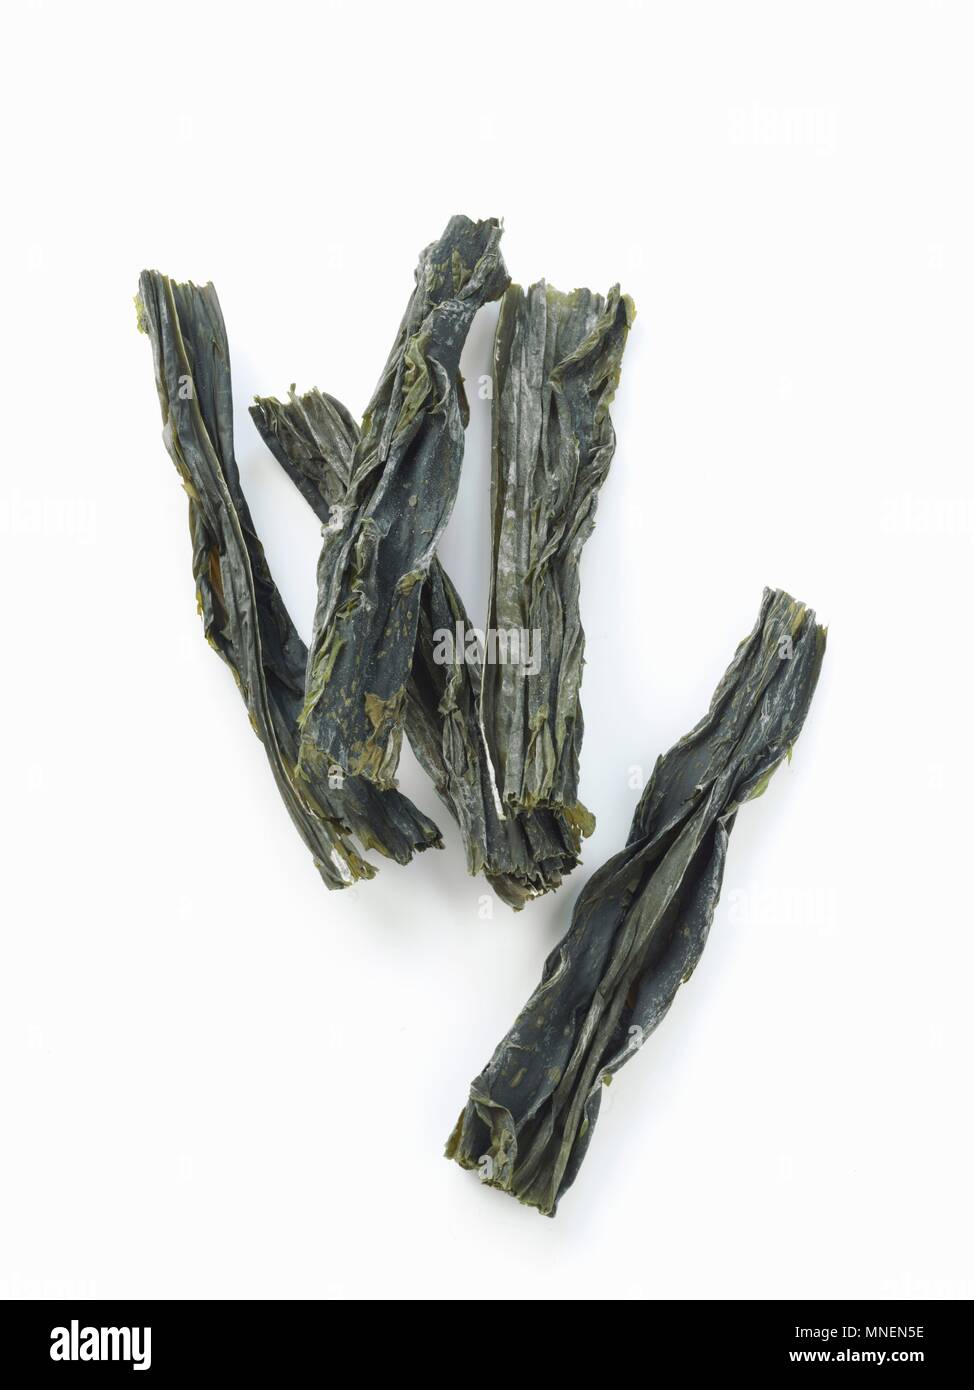 Dried wakame seaweed Stock Photo